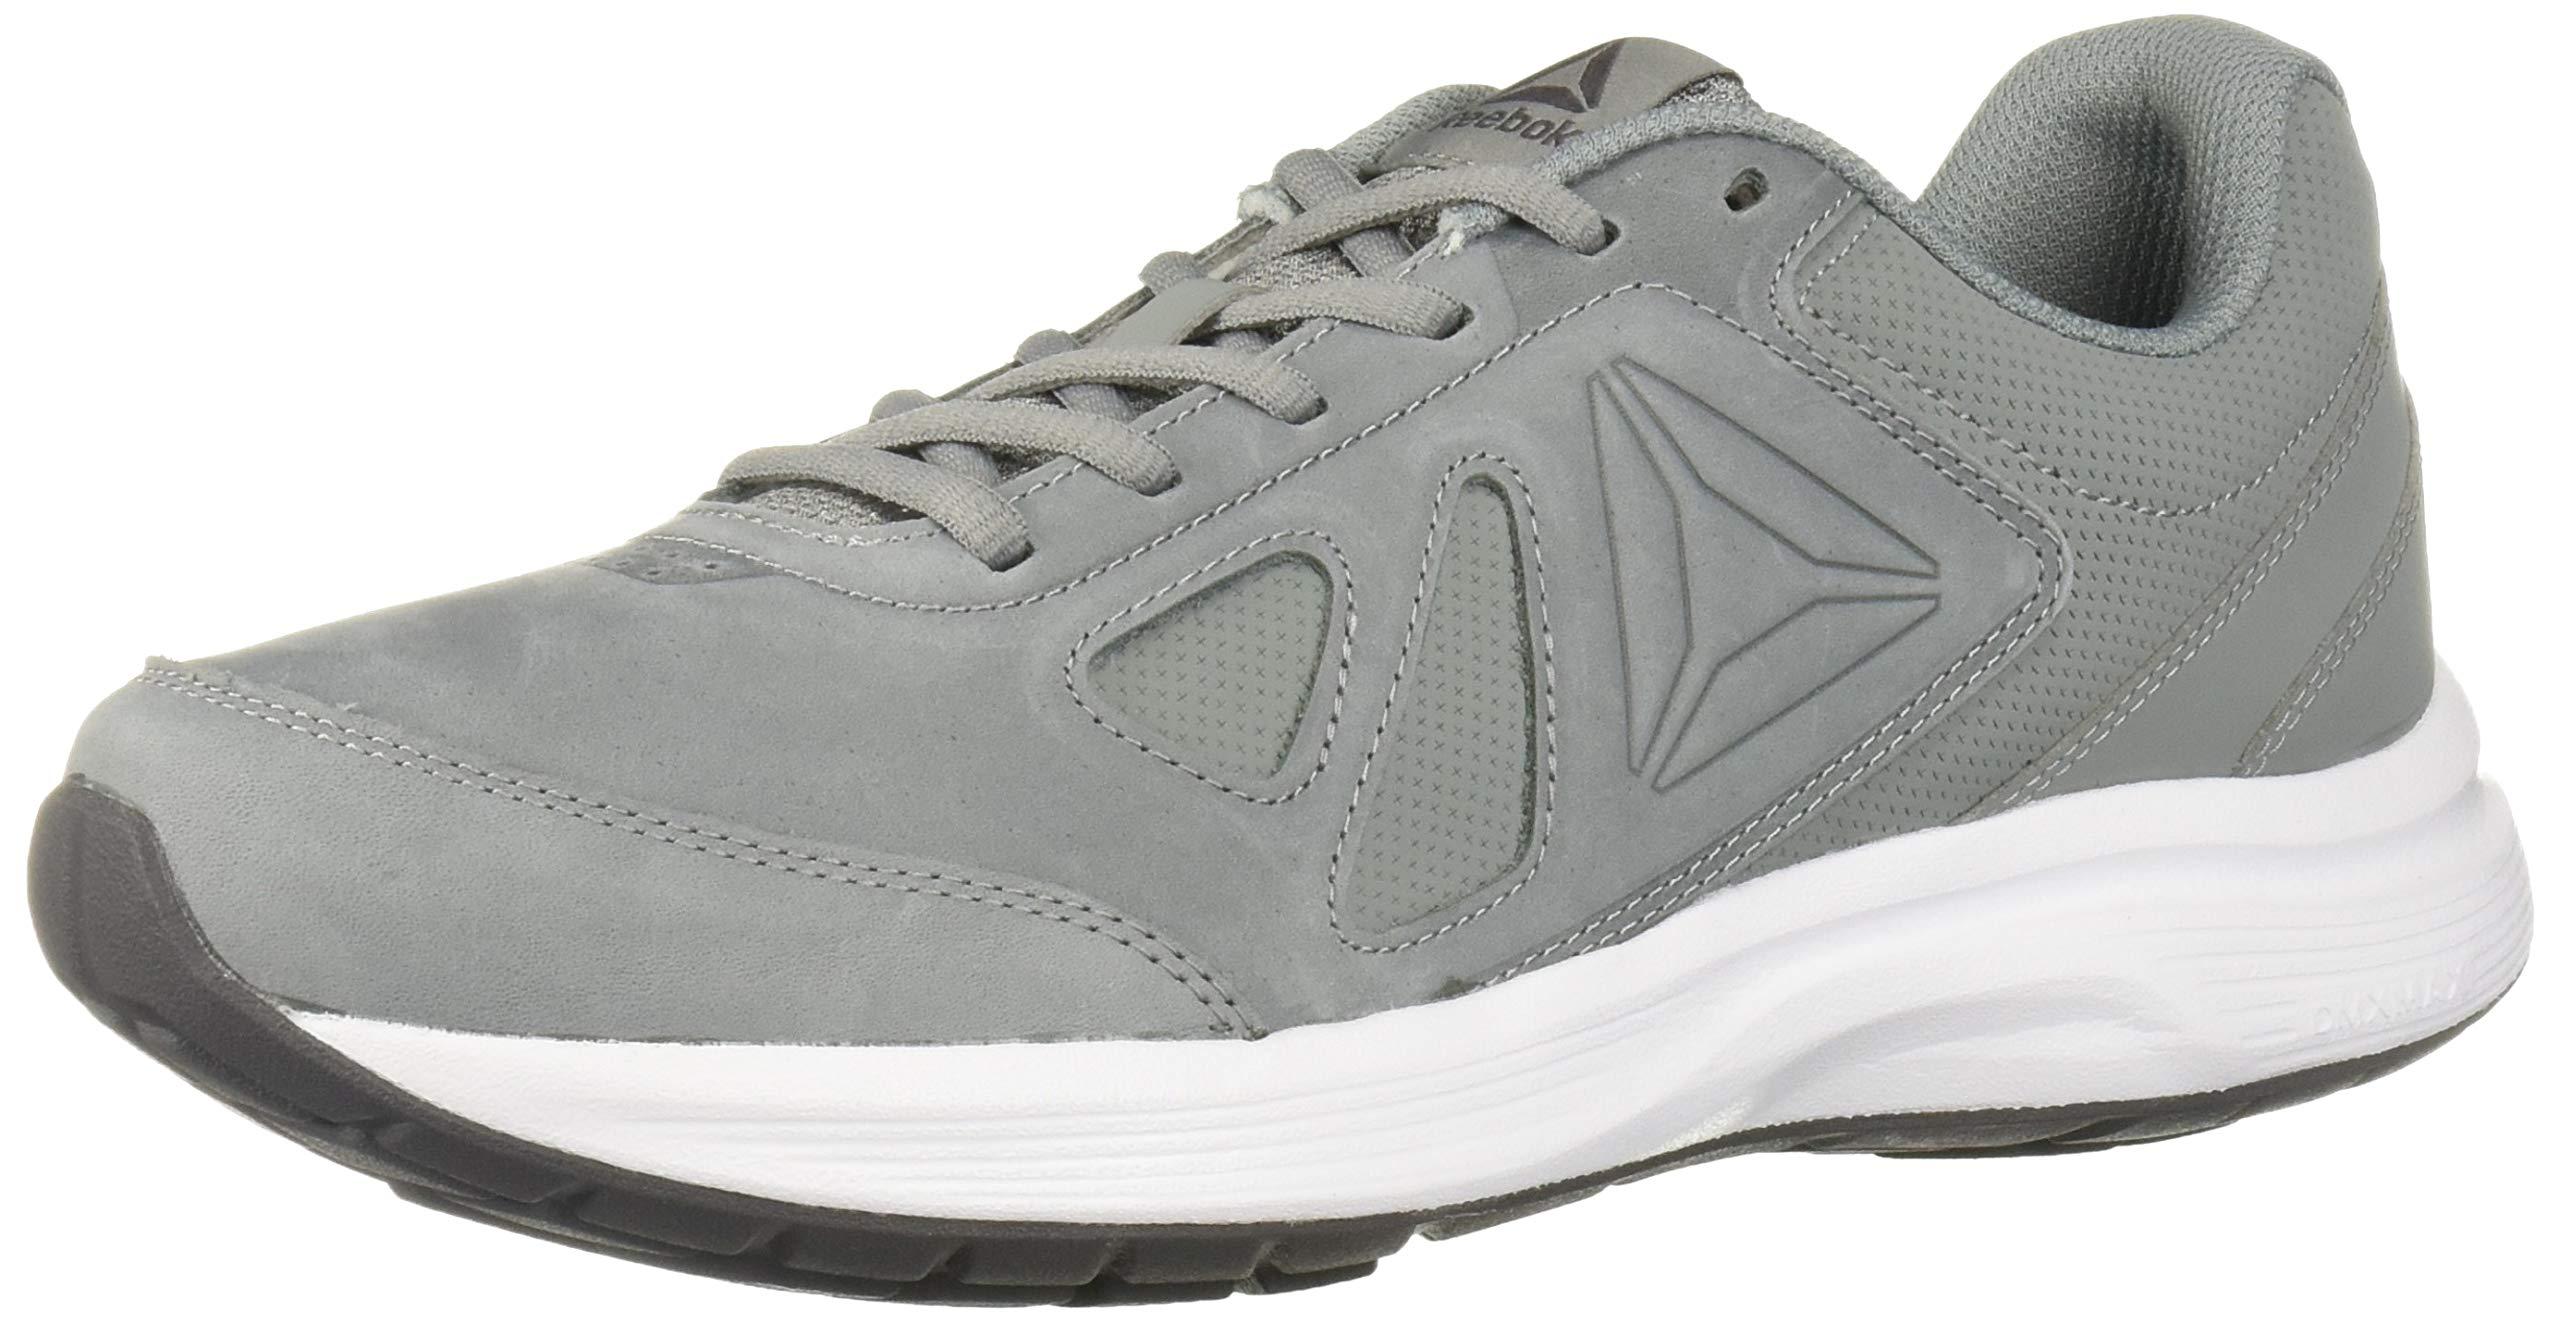 Reebok Leather Walk Ultra 6 Dmx Max Rg Shoe in Flint Grey/Ash Grey/White  (Gray) for Men - Save 29% | Lyst